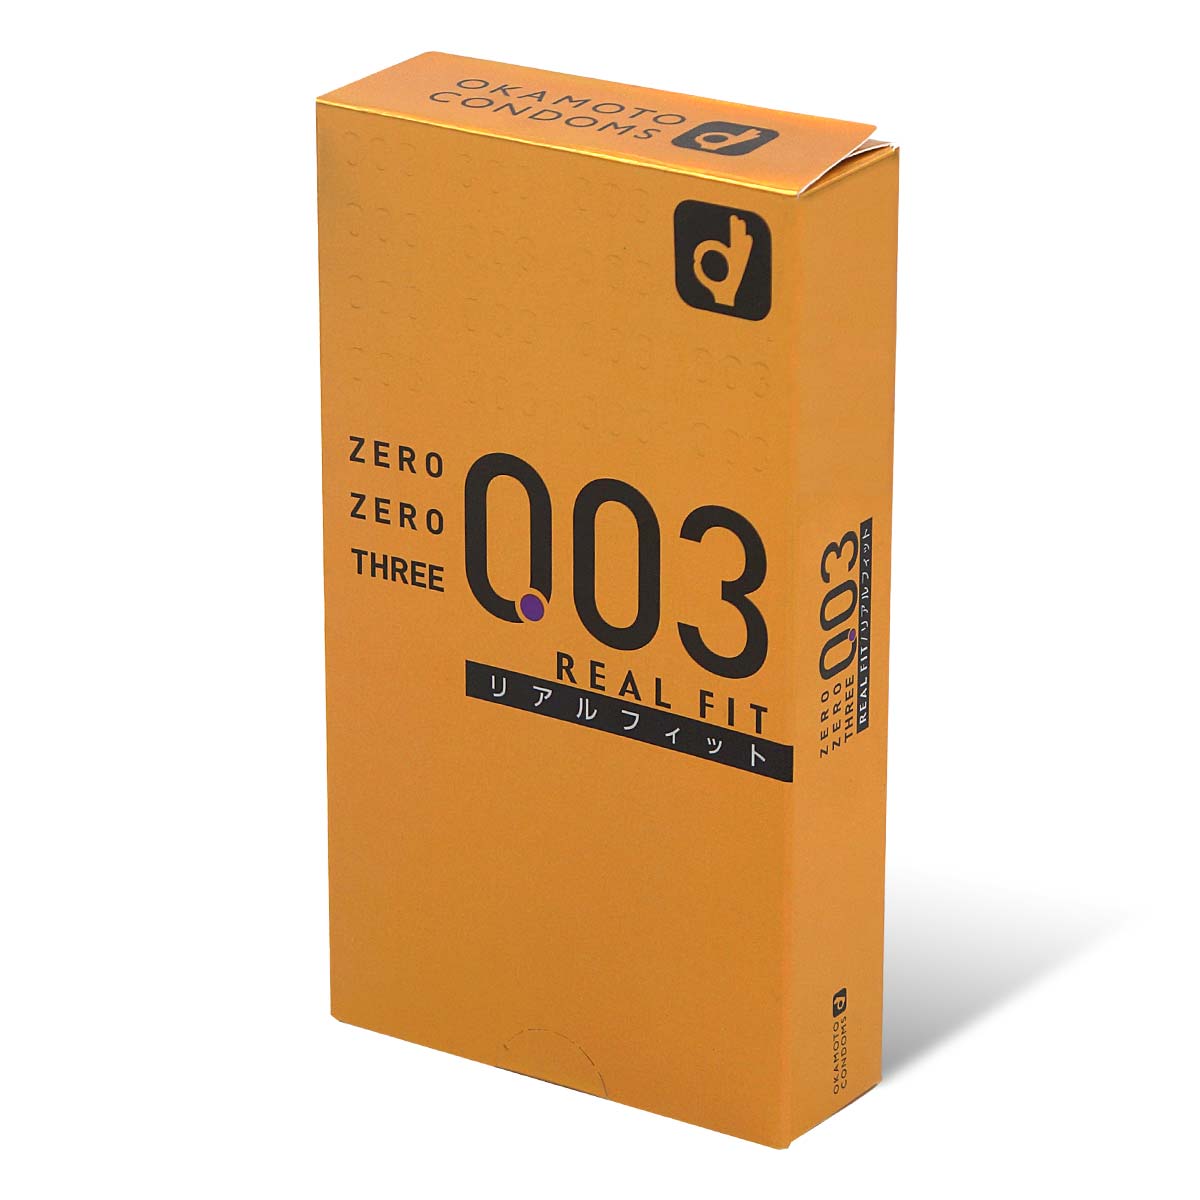 Zero Zero Three 0.03 Real Fit (Japan Edition) 10's Pack Latex Condom-p_1